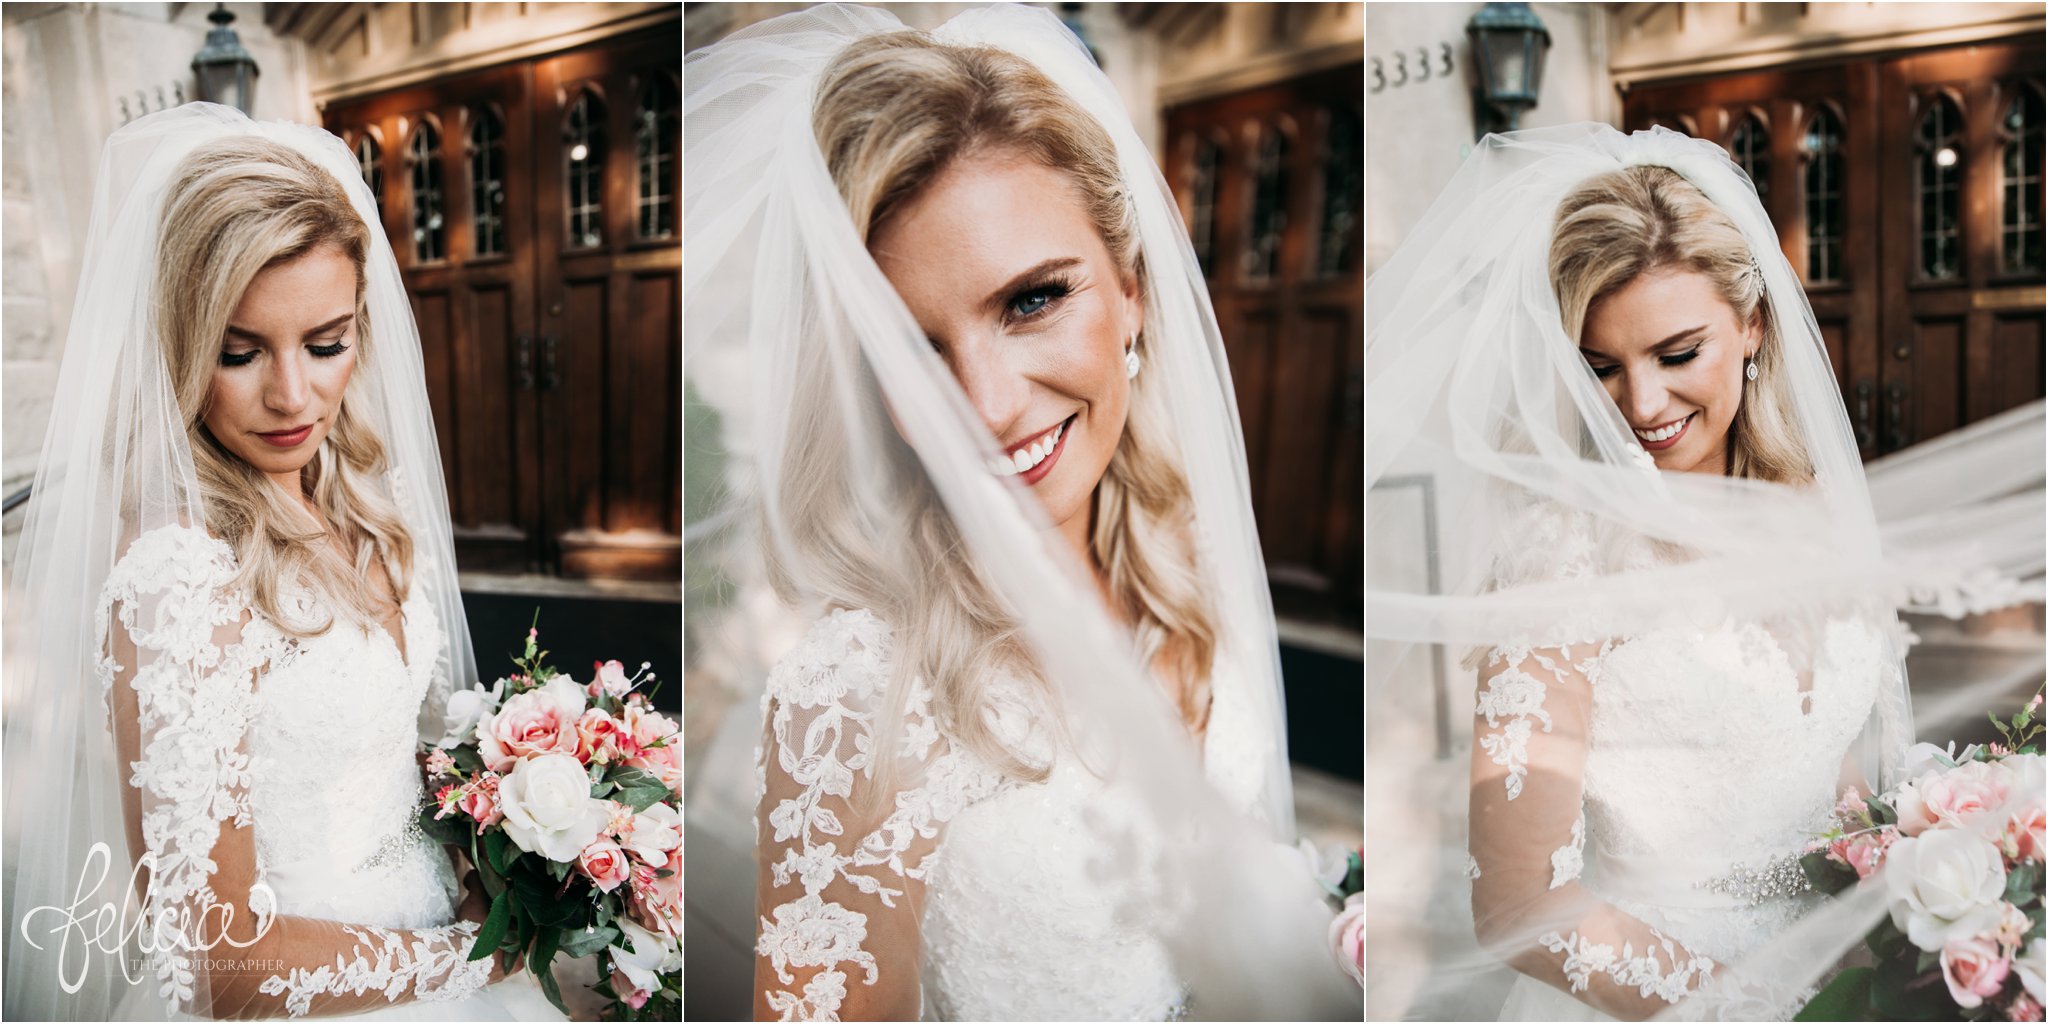 images by feliciathephotographer.com | wedding photographer | kansas city | redemptorist | classic | portrait | flowing veil | lace long sleeve dress | essence of Australia | belle vogue | beautiful bride | joy | true love | whimsical | romantic | glamorous | pink florals | 